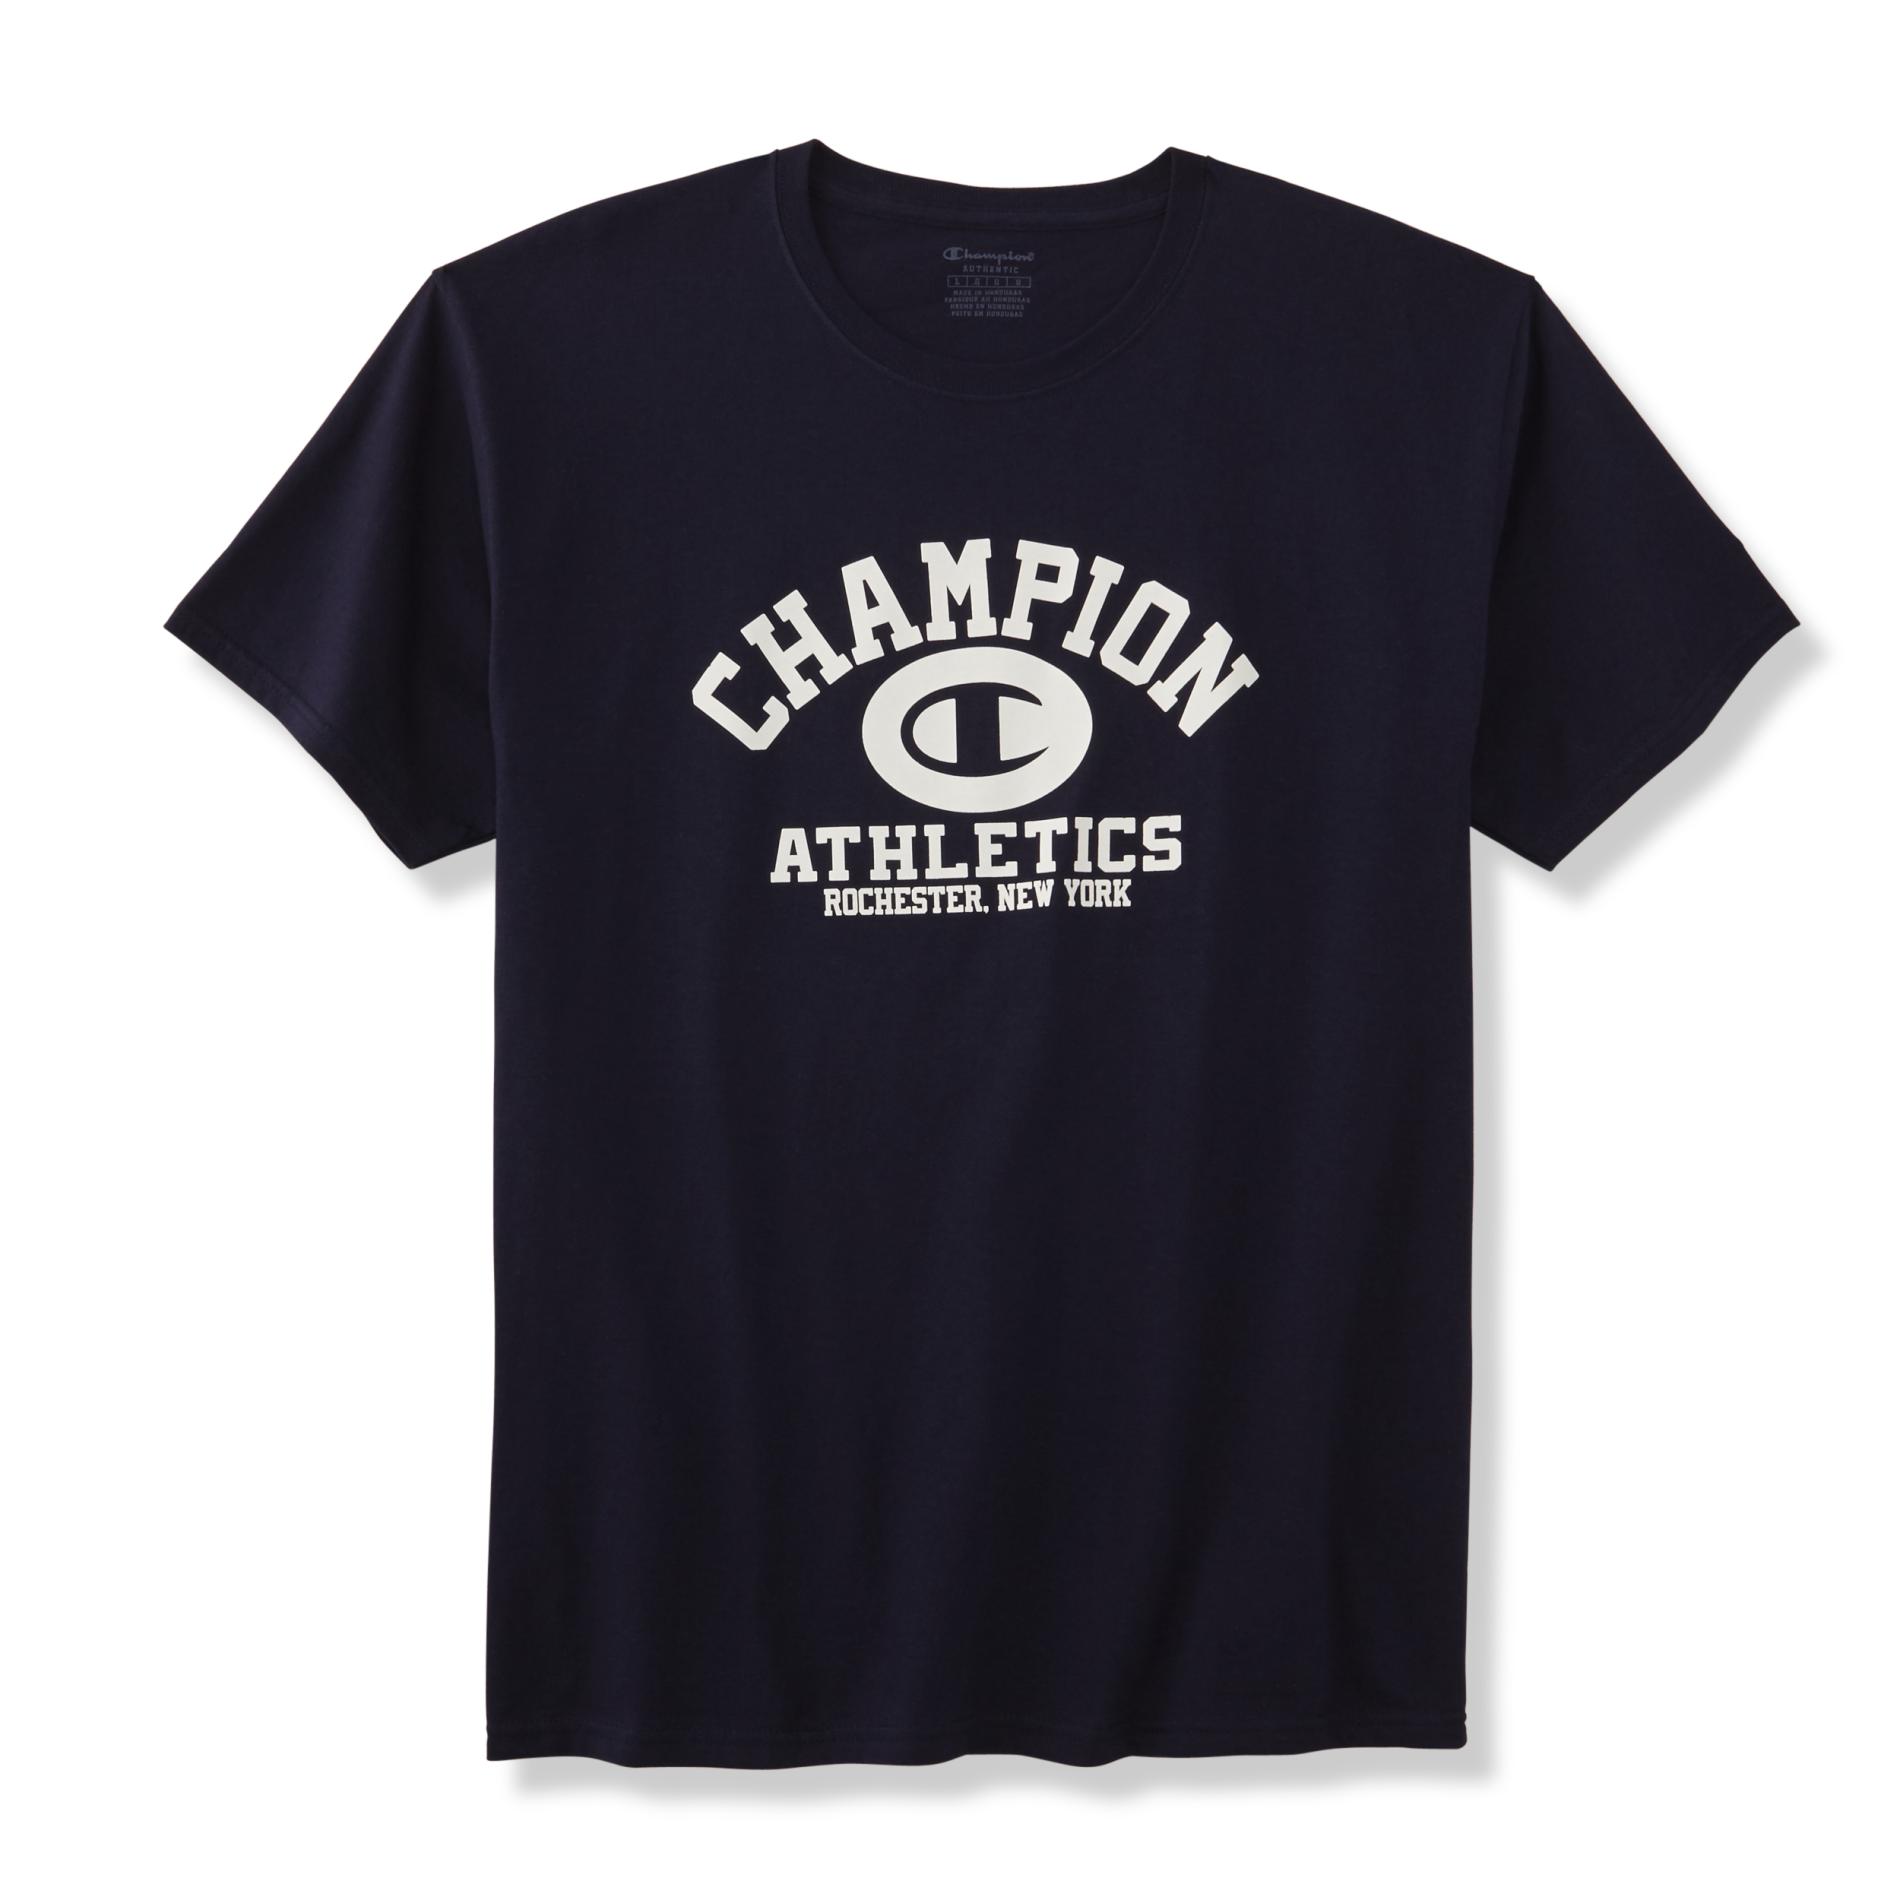 sears champion shirts